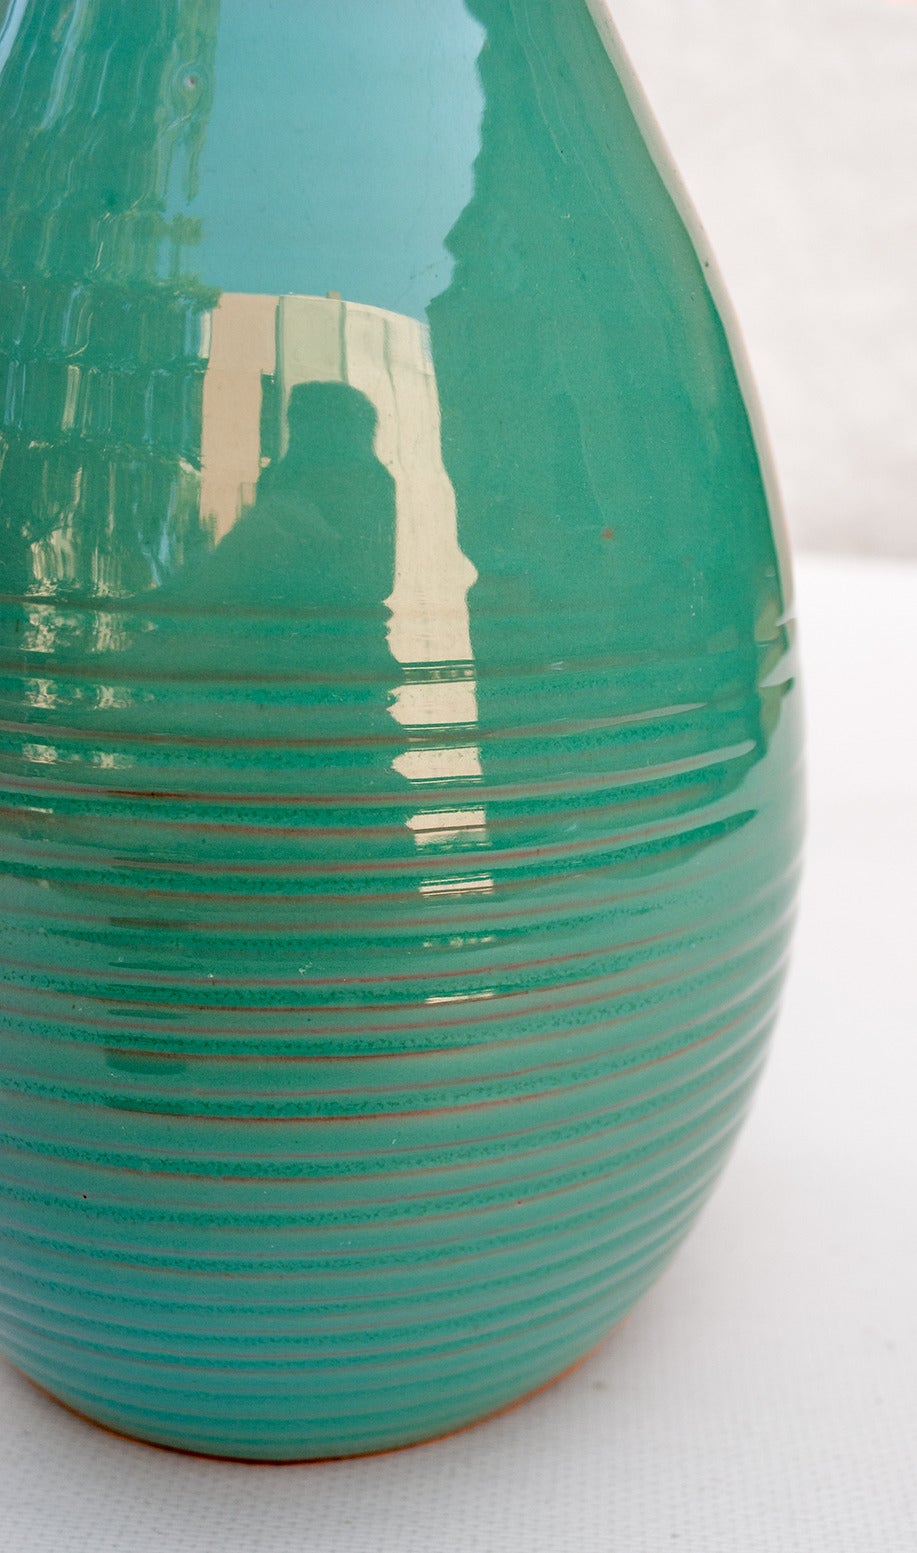 Swedish Scandinavian Modern ceramic vase in shiny green glaze by Ewald Dahlskog, Bo Faja